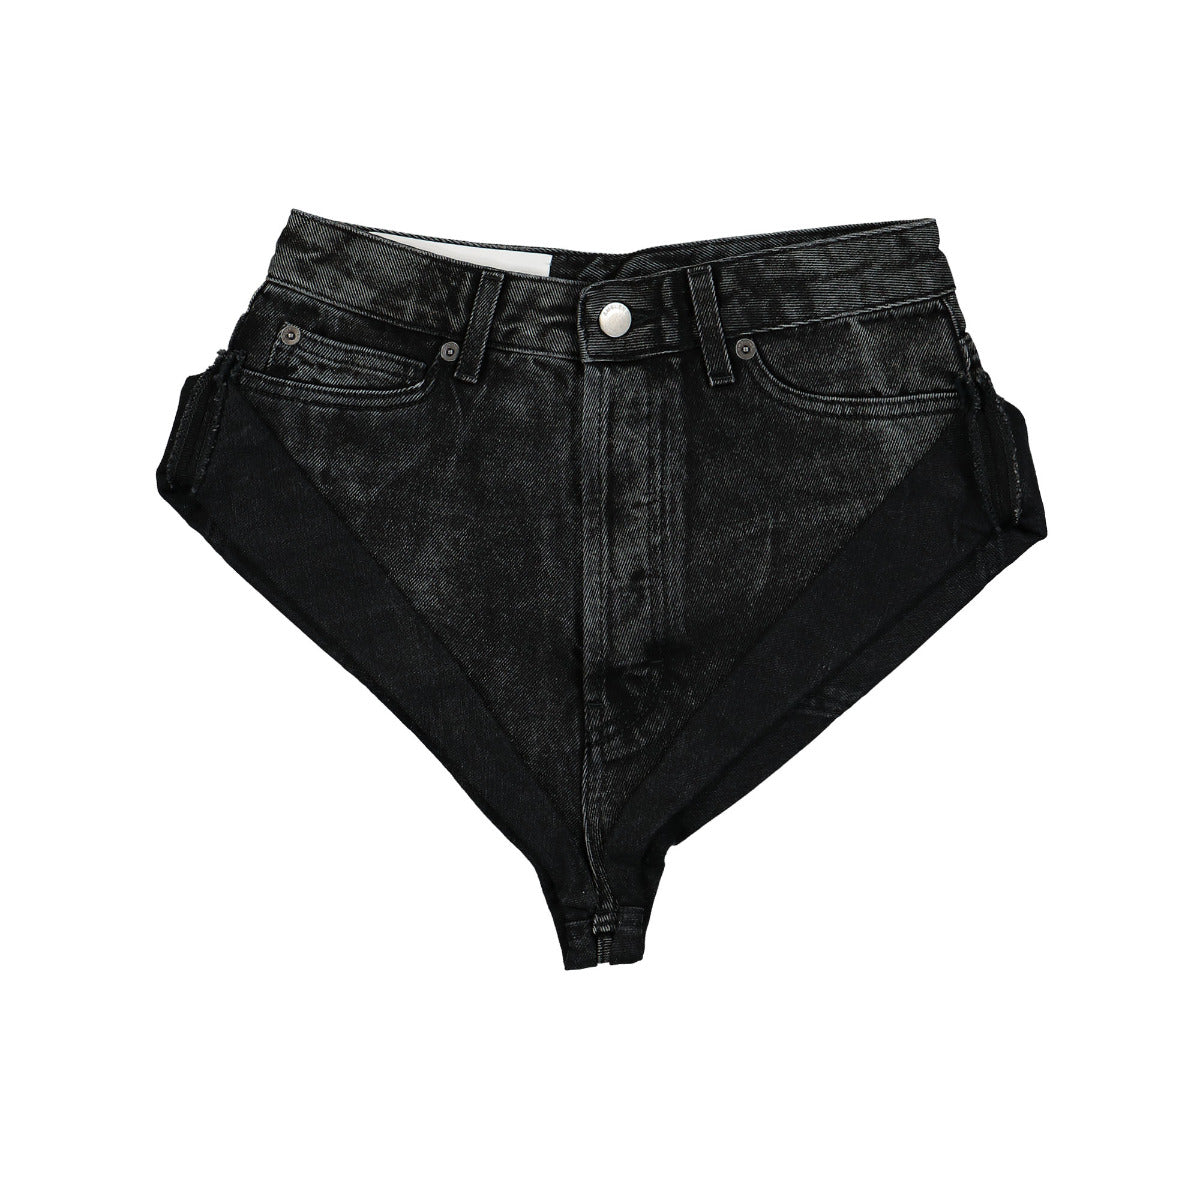 Buy GUOCAI Women Sexy Low Rise Club Thong Denim Jeans Shorts Micro Mini Hot  Pants Black L at Amazon.in